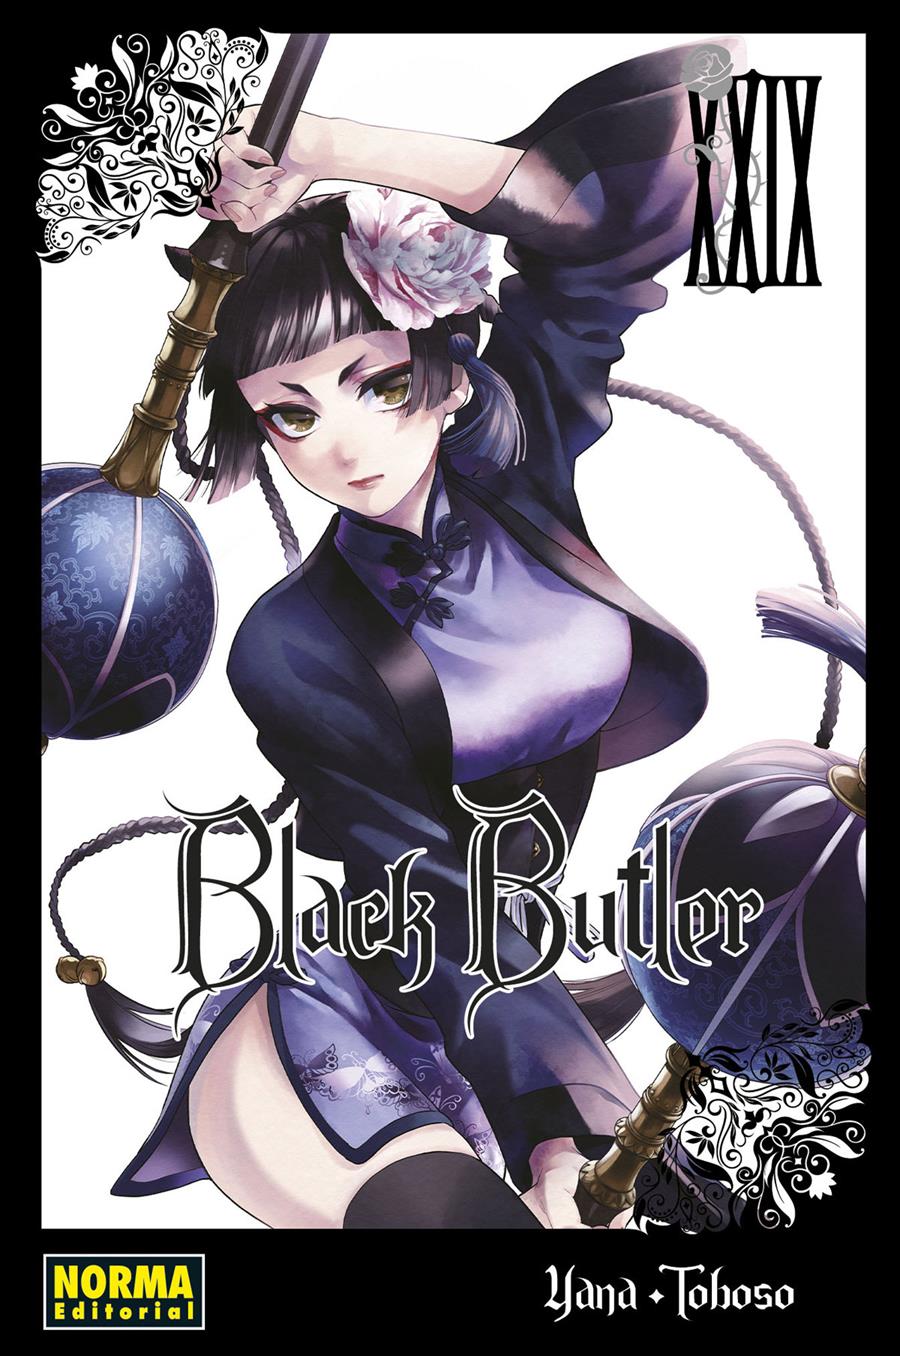 Black Butler 29 | N0621-NOR31 | Yana Toboso | Terra de Còmic - Tu tienda de cómics online especializada en cómics, manga y merchandising